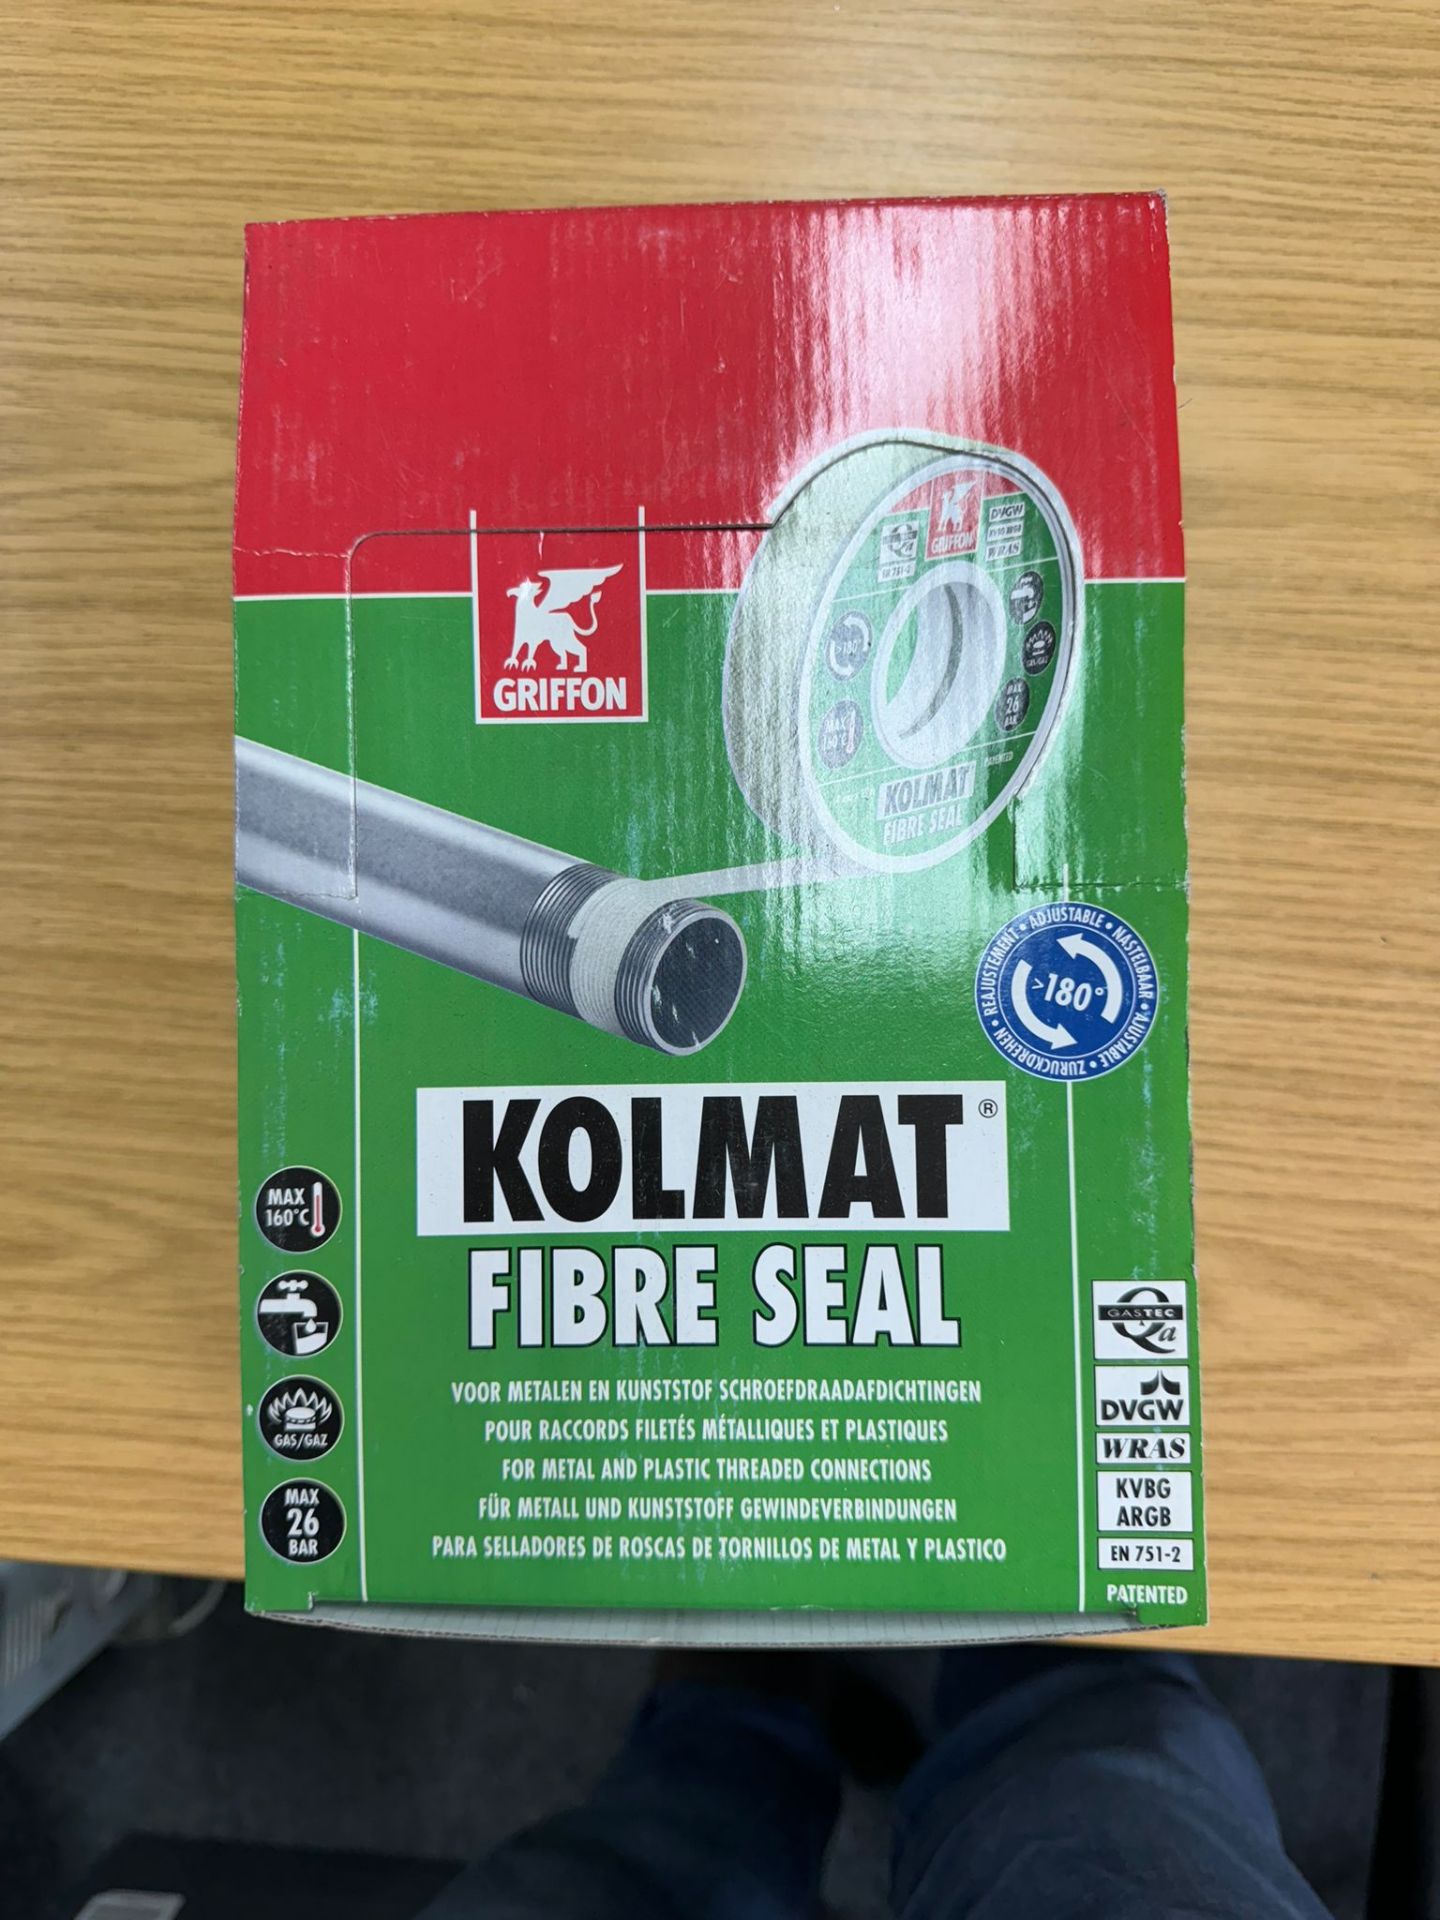 Box kolmat fibre seal contains 30 rolls